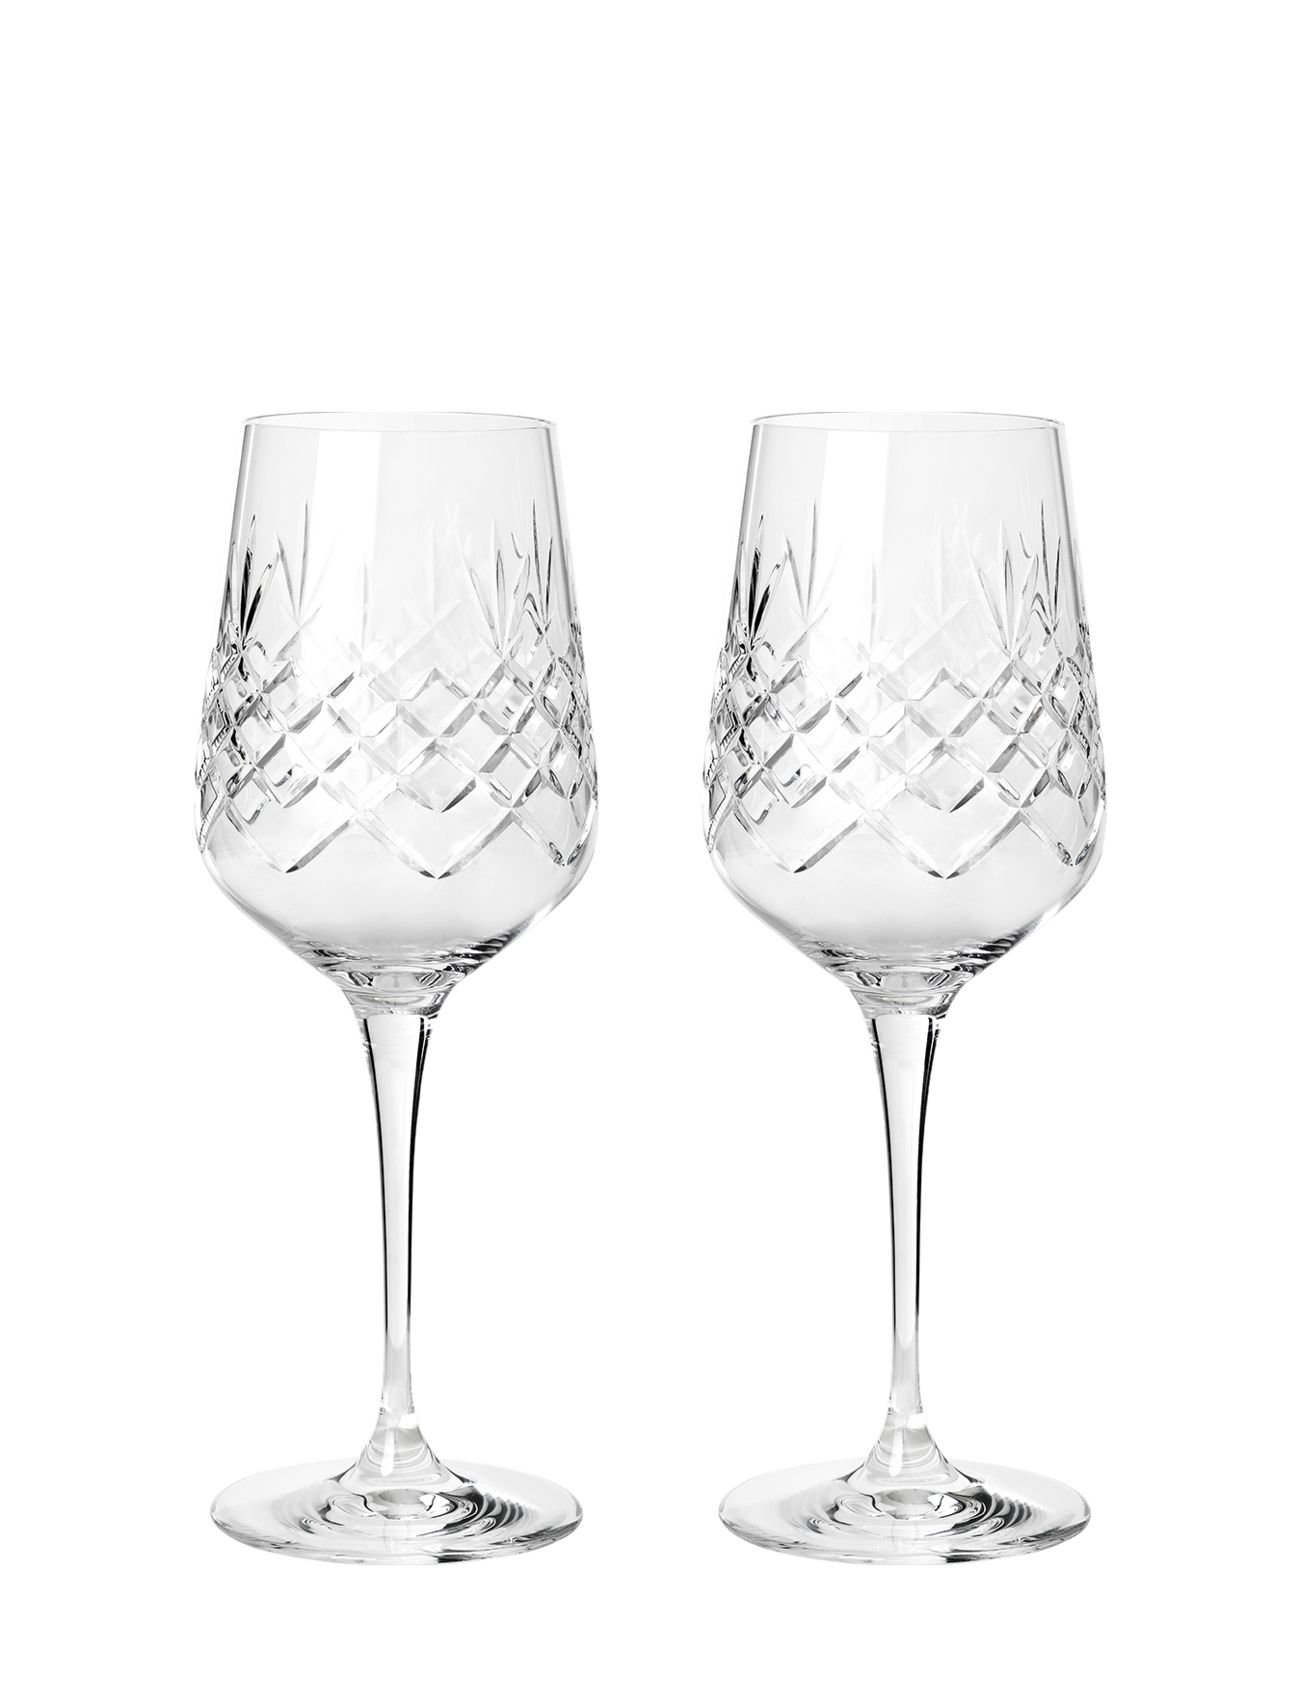 Crispy Monsieur - 2 Pcs Home Tableware Glass Wine Glass Nude Frederik Bagger